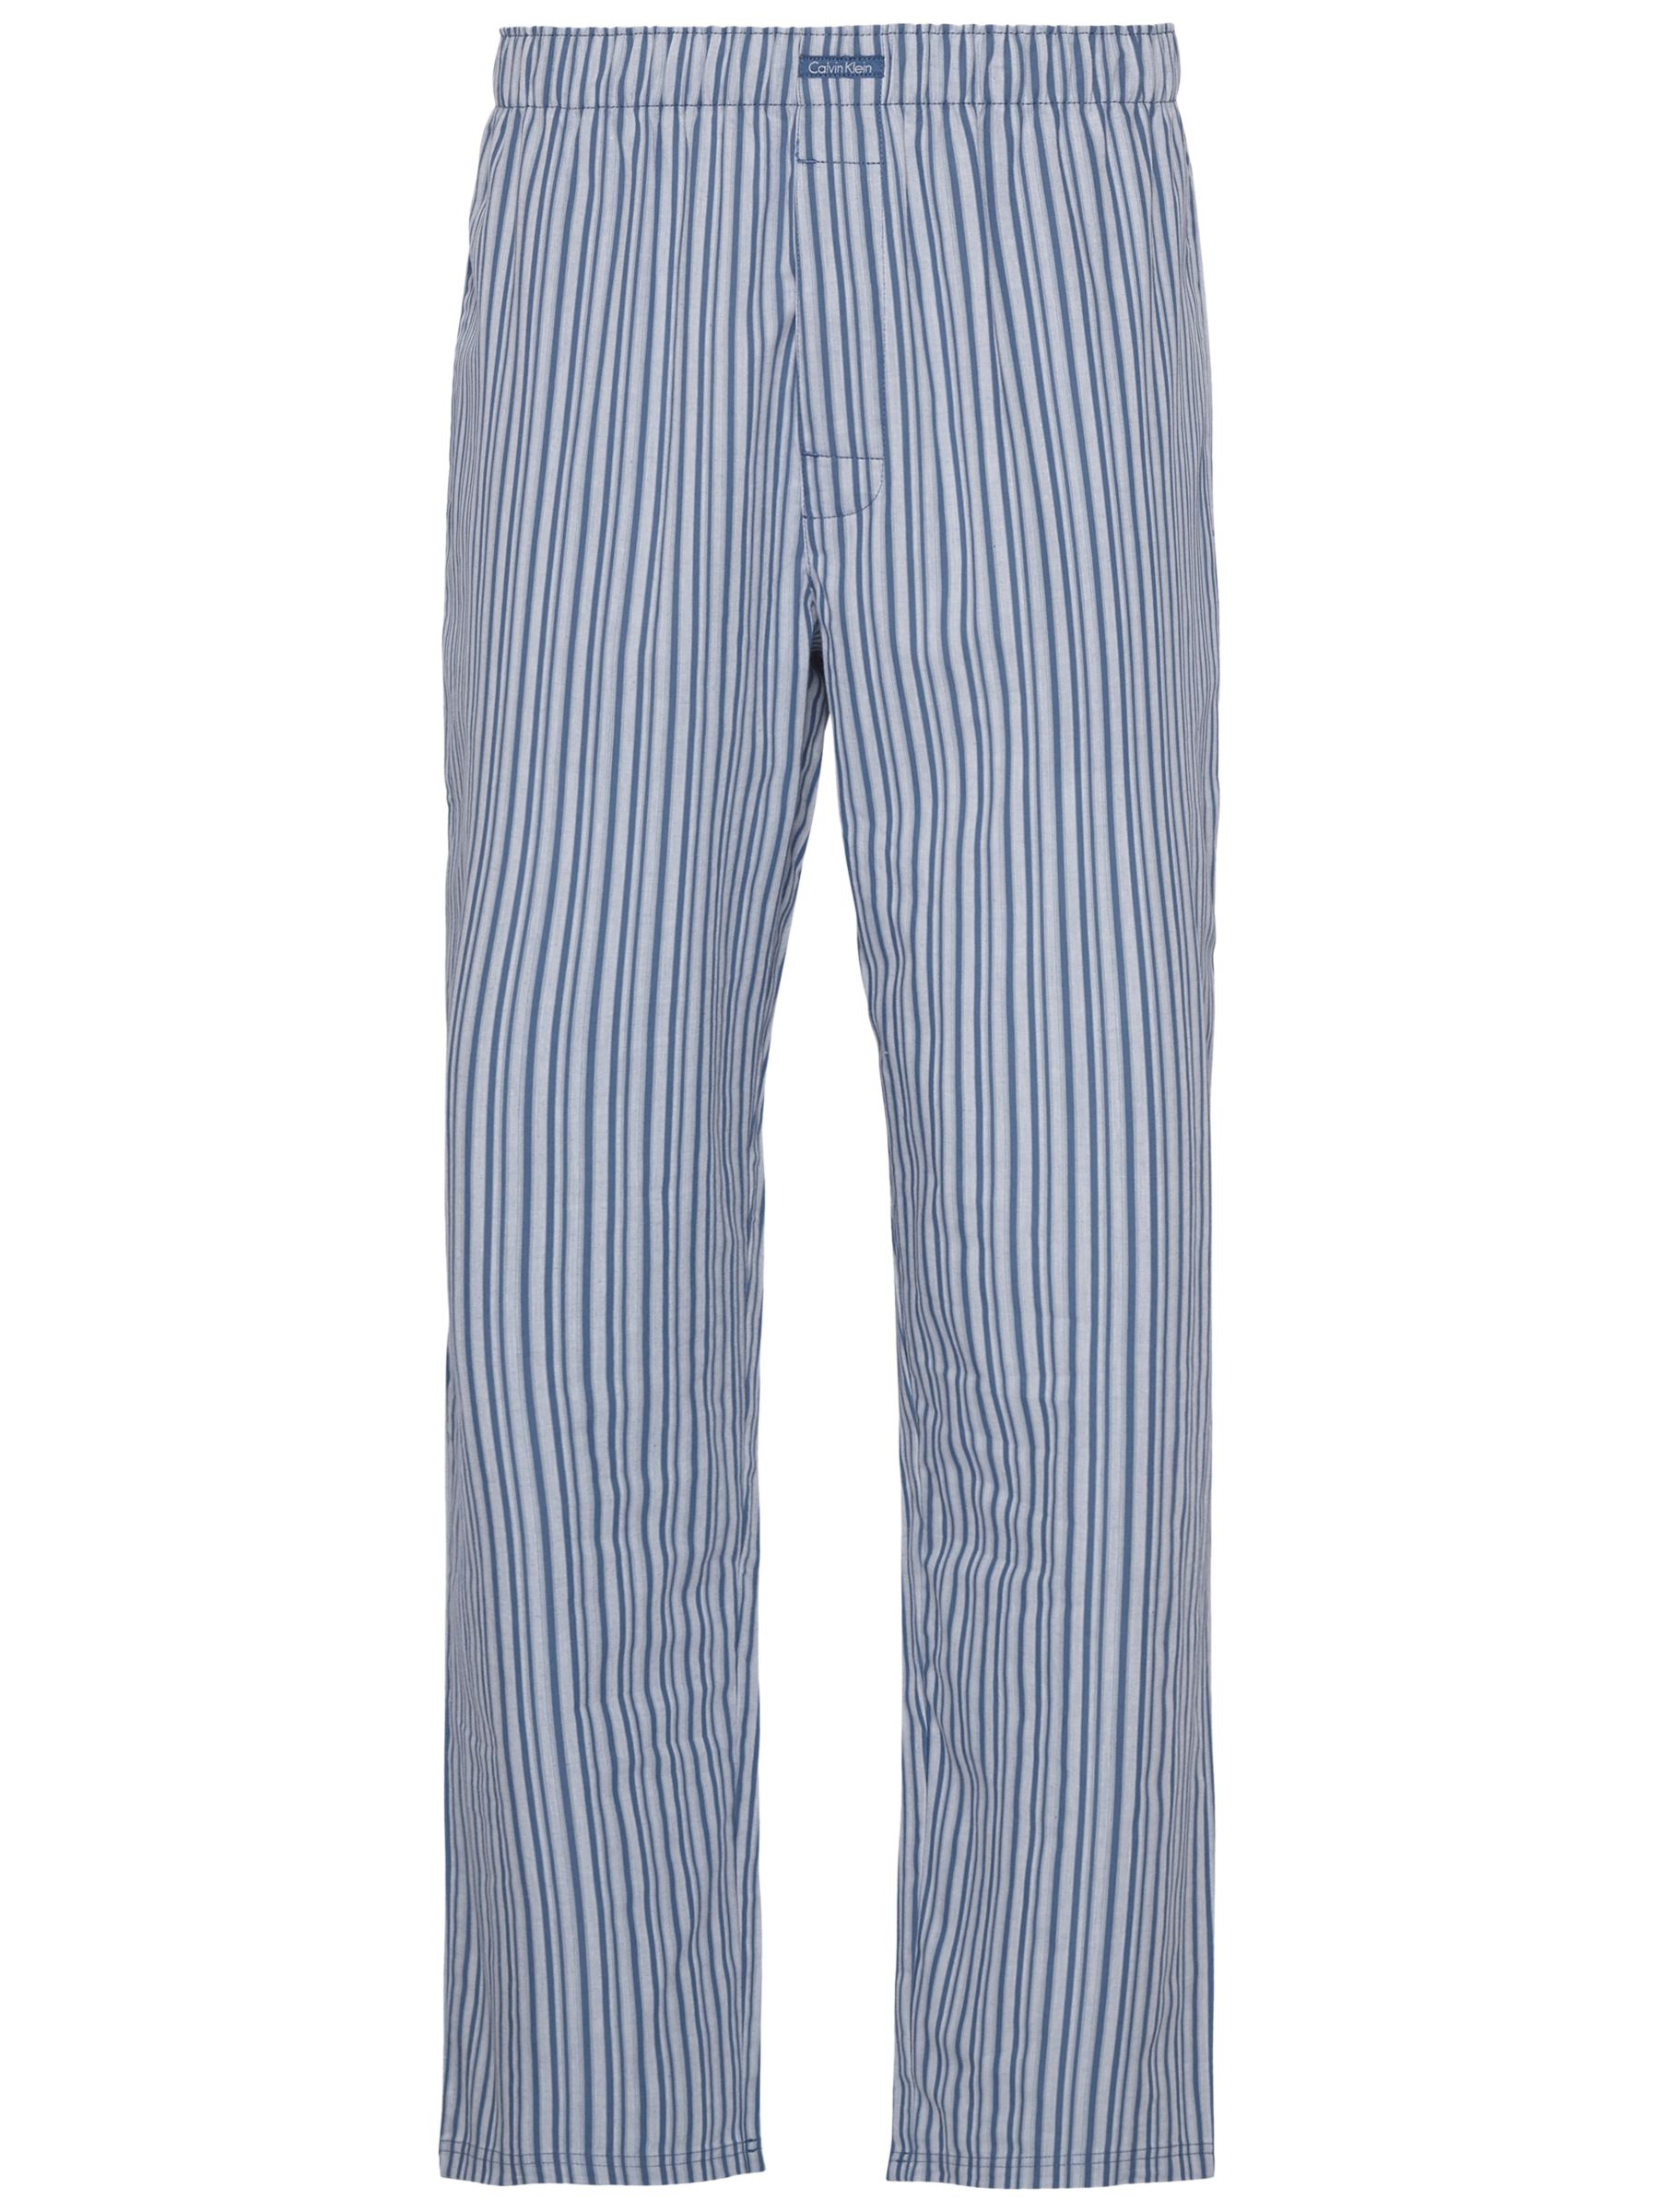 Calvin Klein Striped Cotton Pyjama Pants, Multi